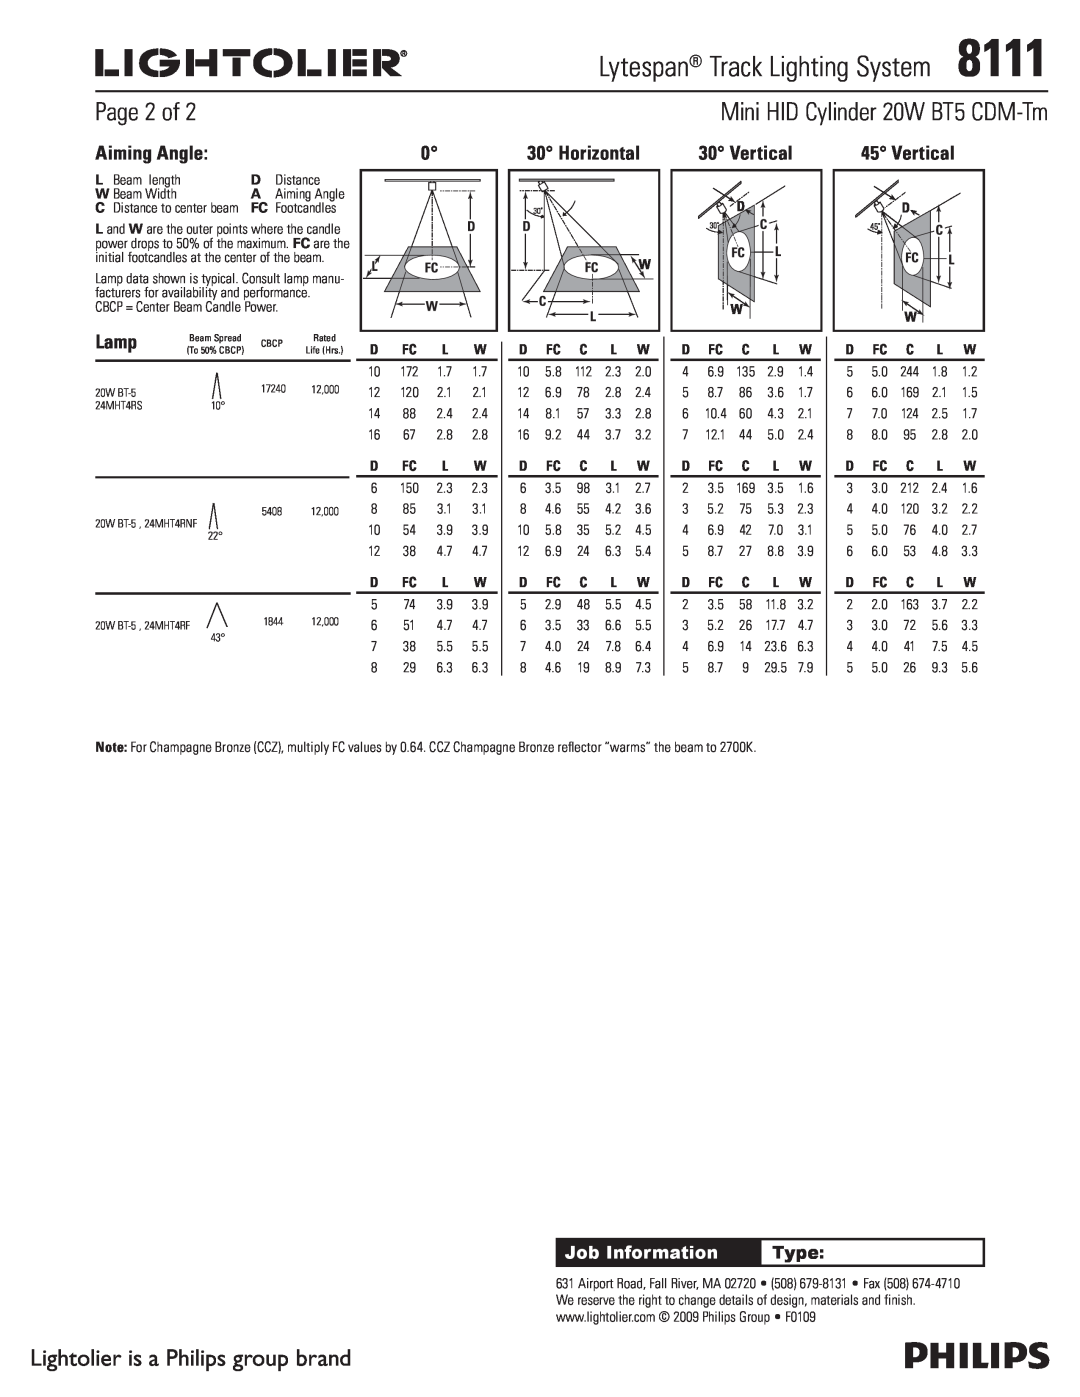 Lightolier 8111 Mini HID Cylinder 20W BT5 CDM-Tm, Page 2 of, Aiming Angle, Horizontal, Vertical, Lamp, Job Information 